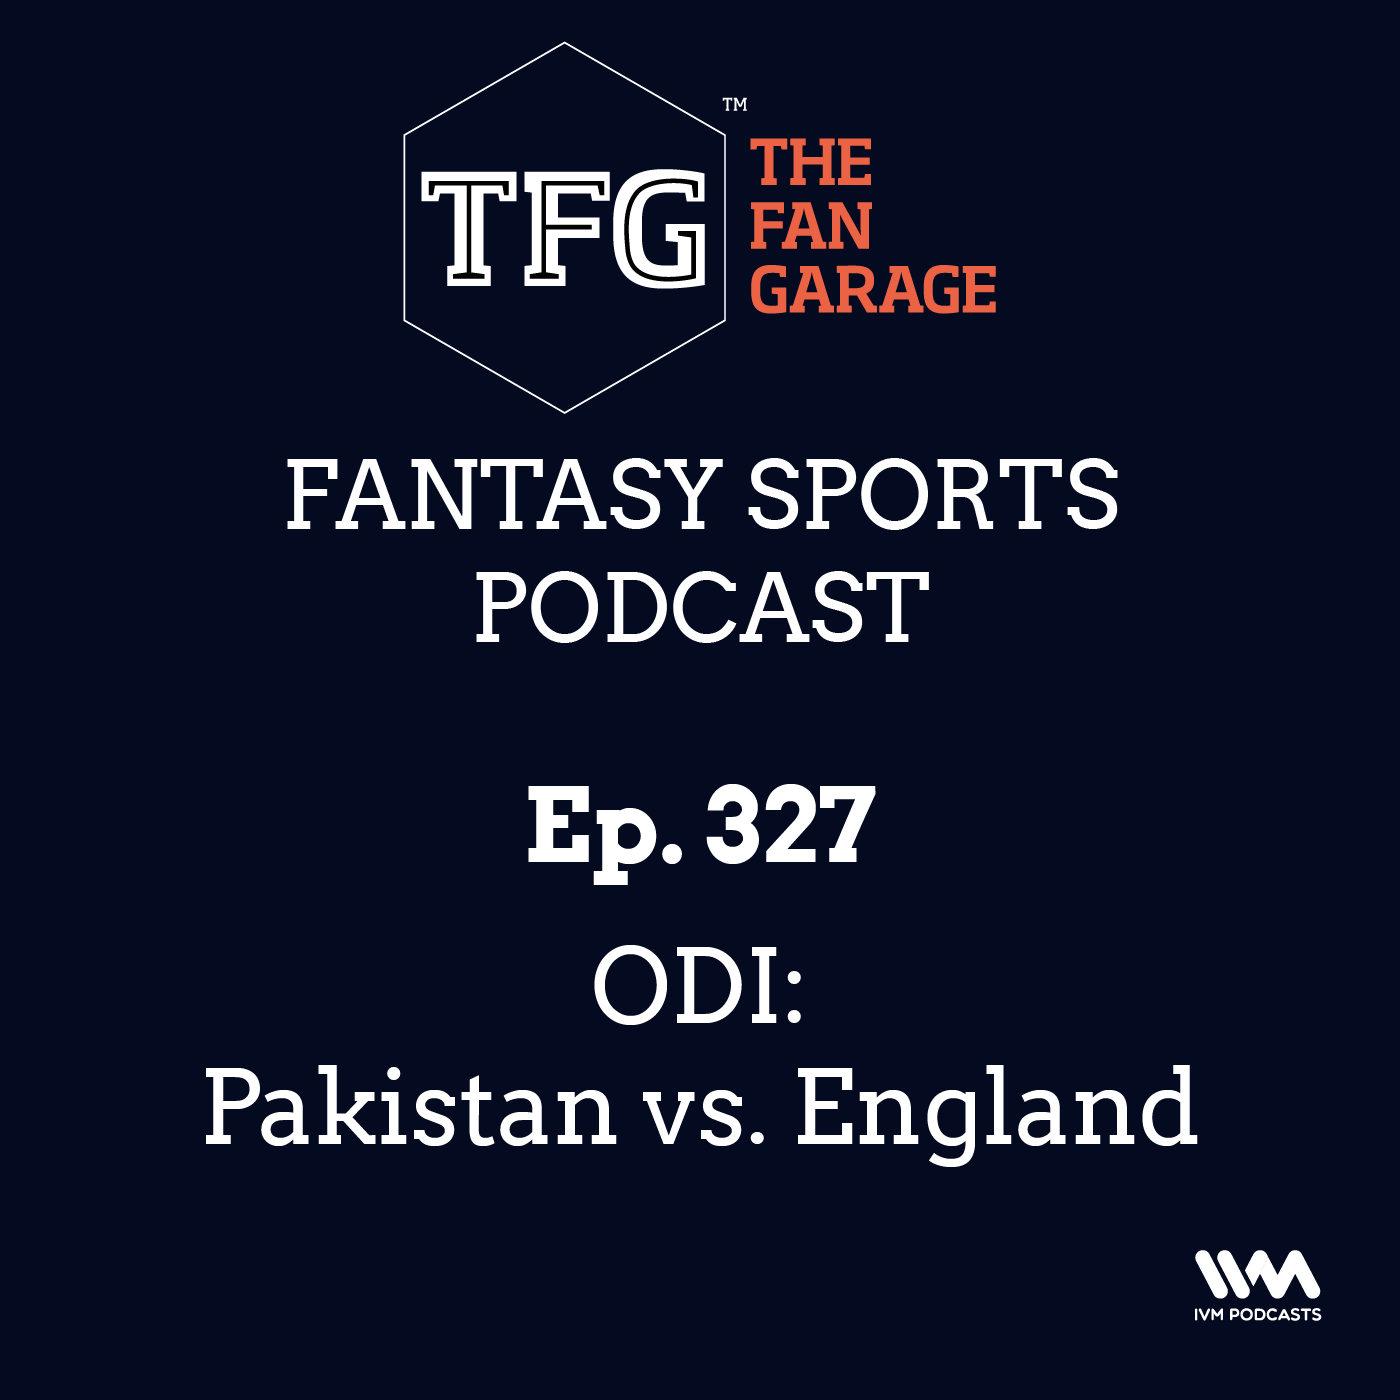 TFG Fantasy Sports Podcast Ep. 327: ODI: Pakistan vs. England